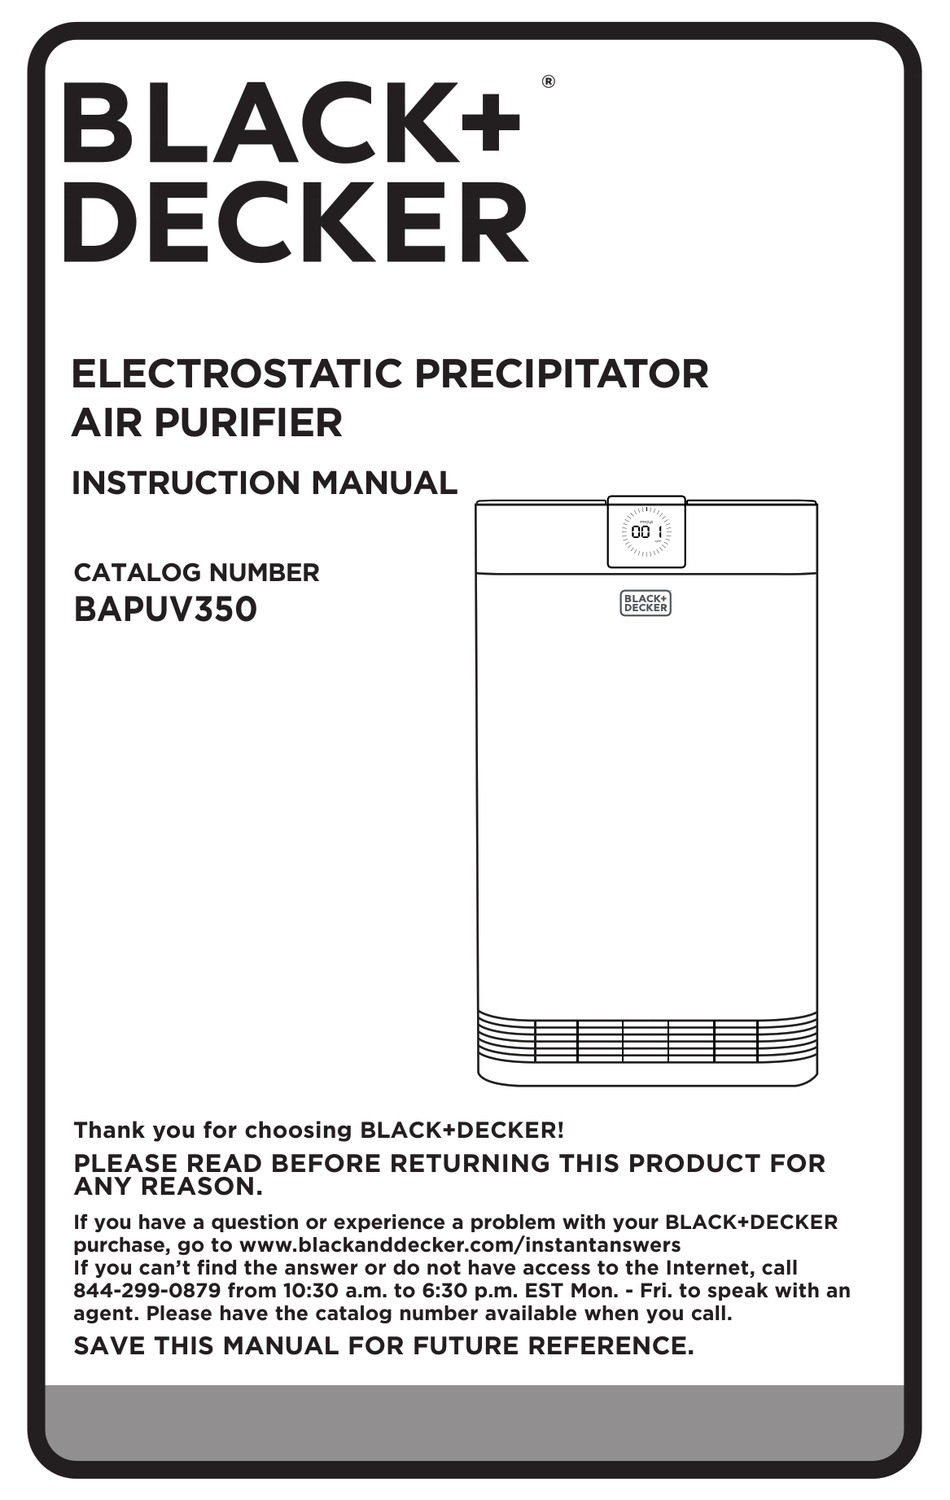 Black+decker BAPUV350 4-Stage Electrostatic Precipitator Air Purifier